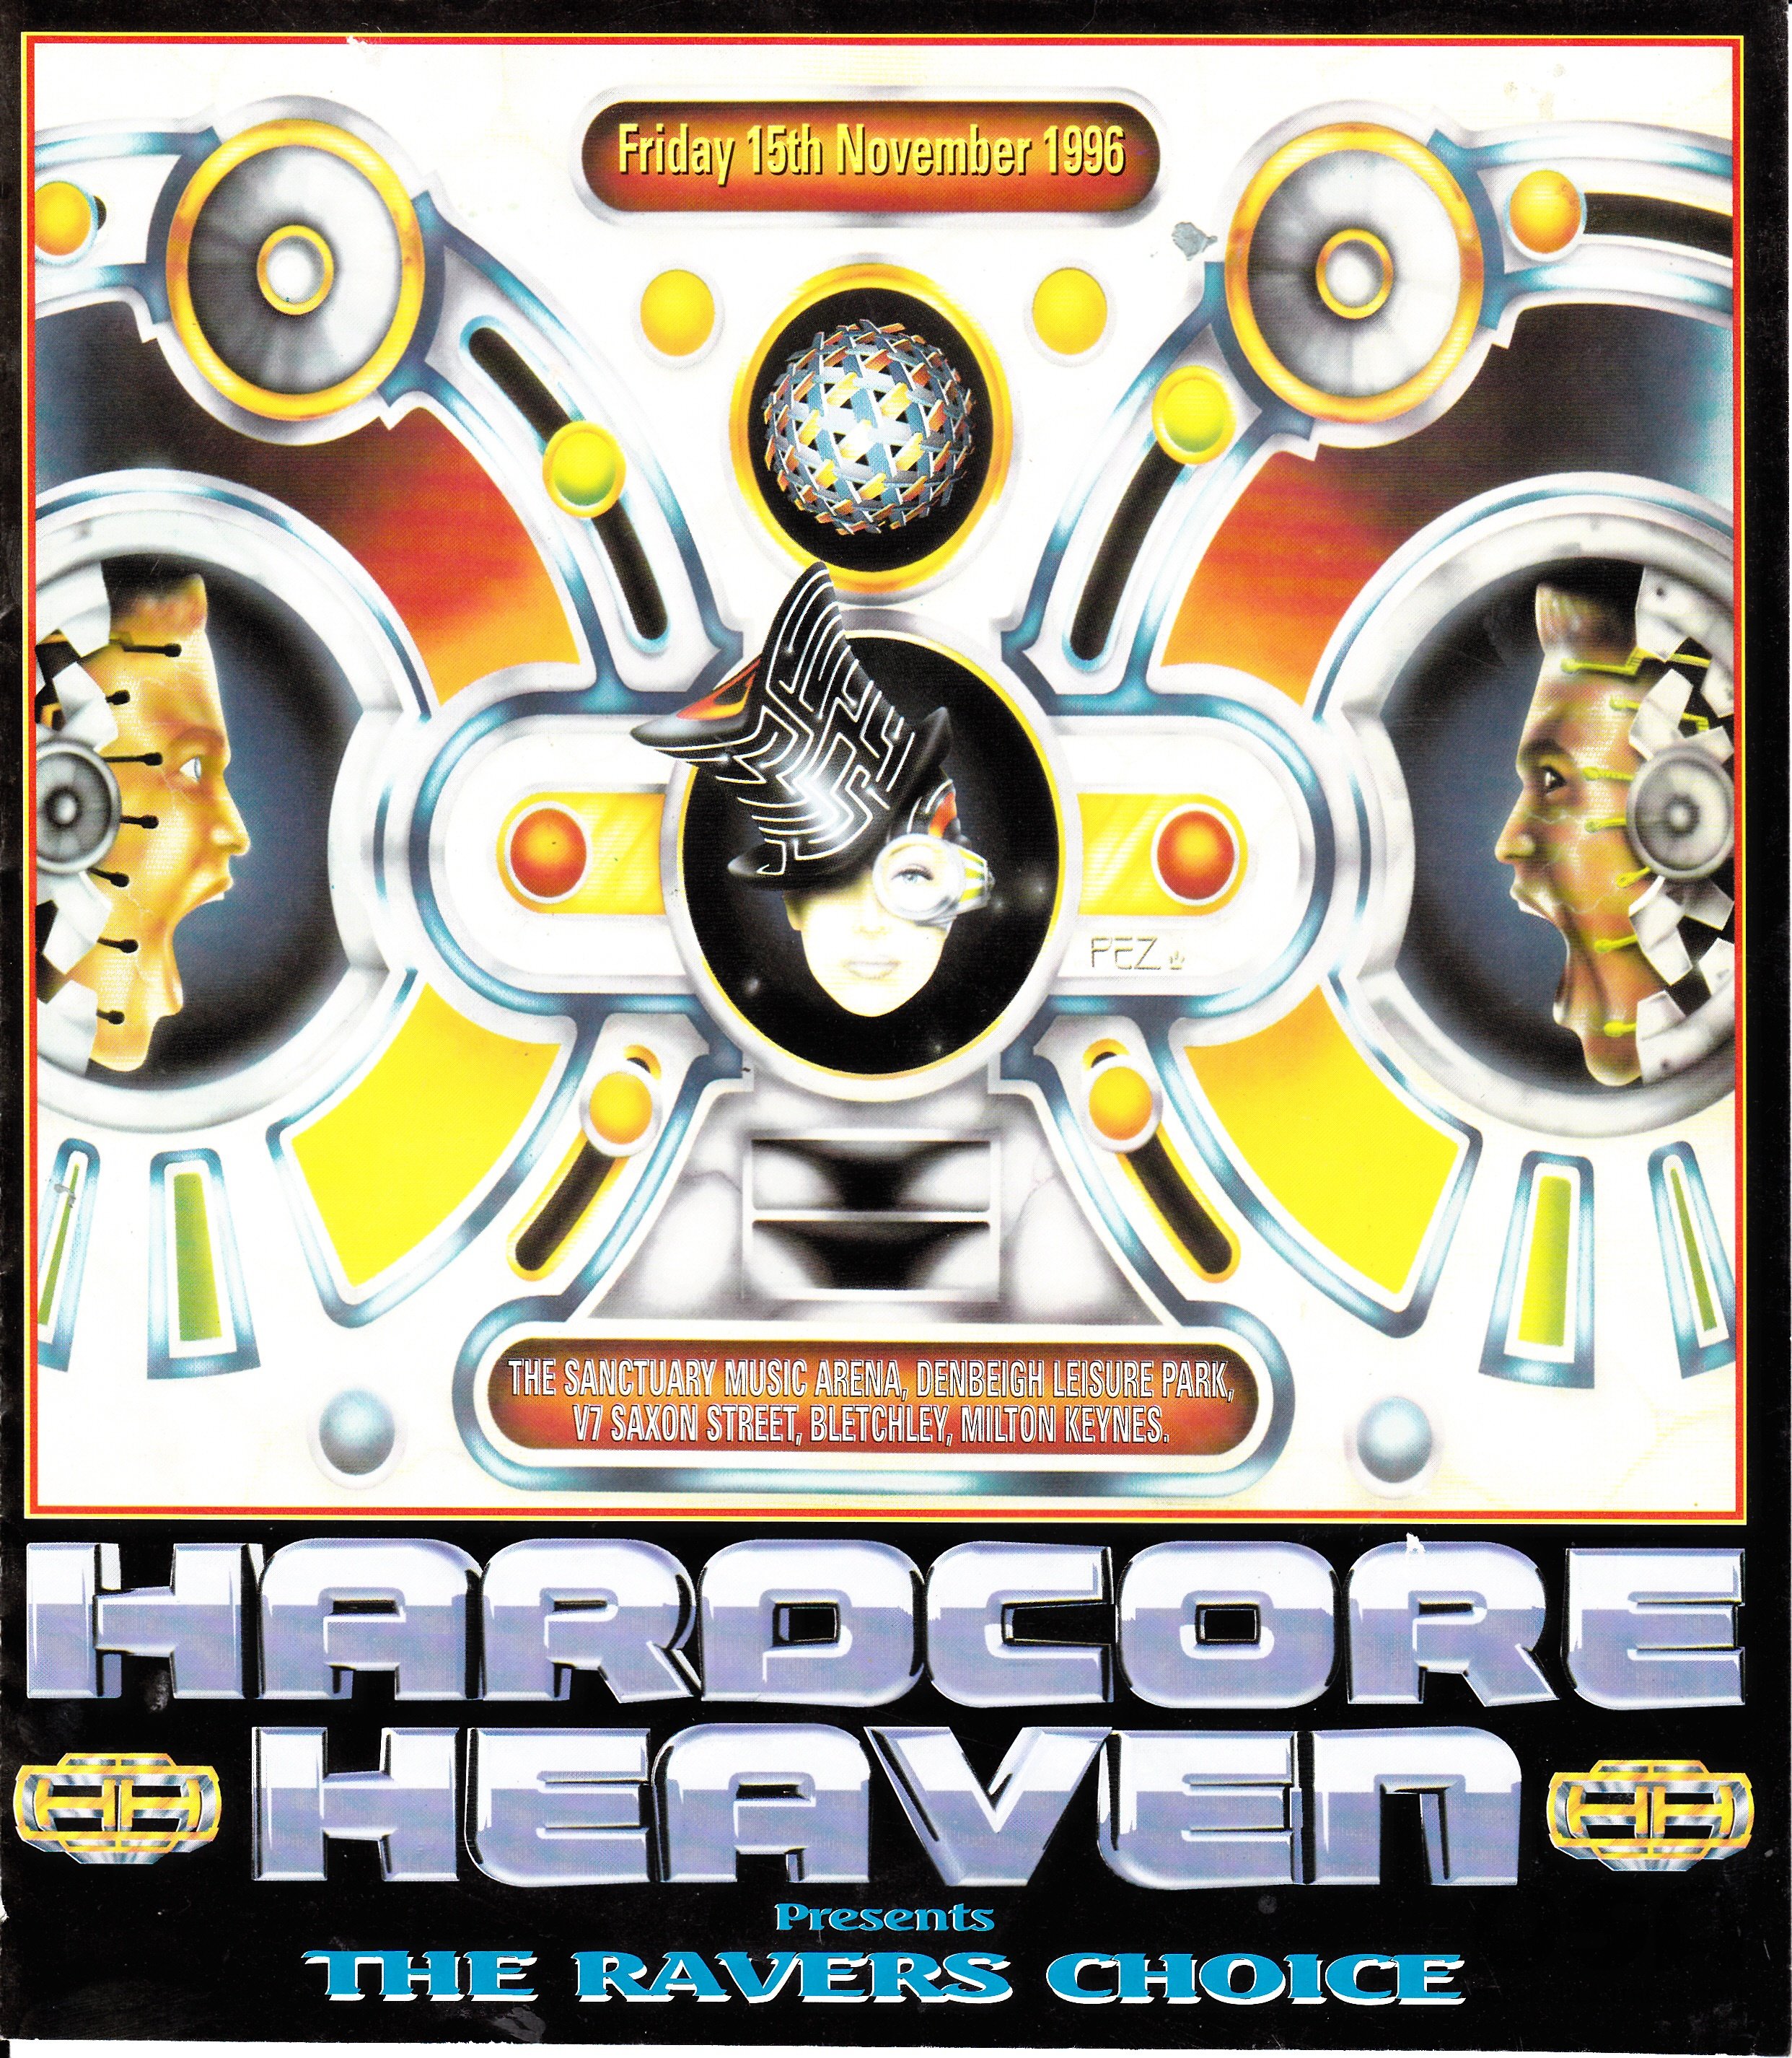 Hardcore Heaven 3a.jpg